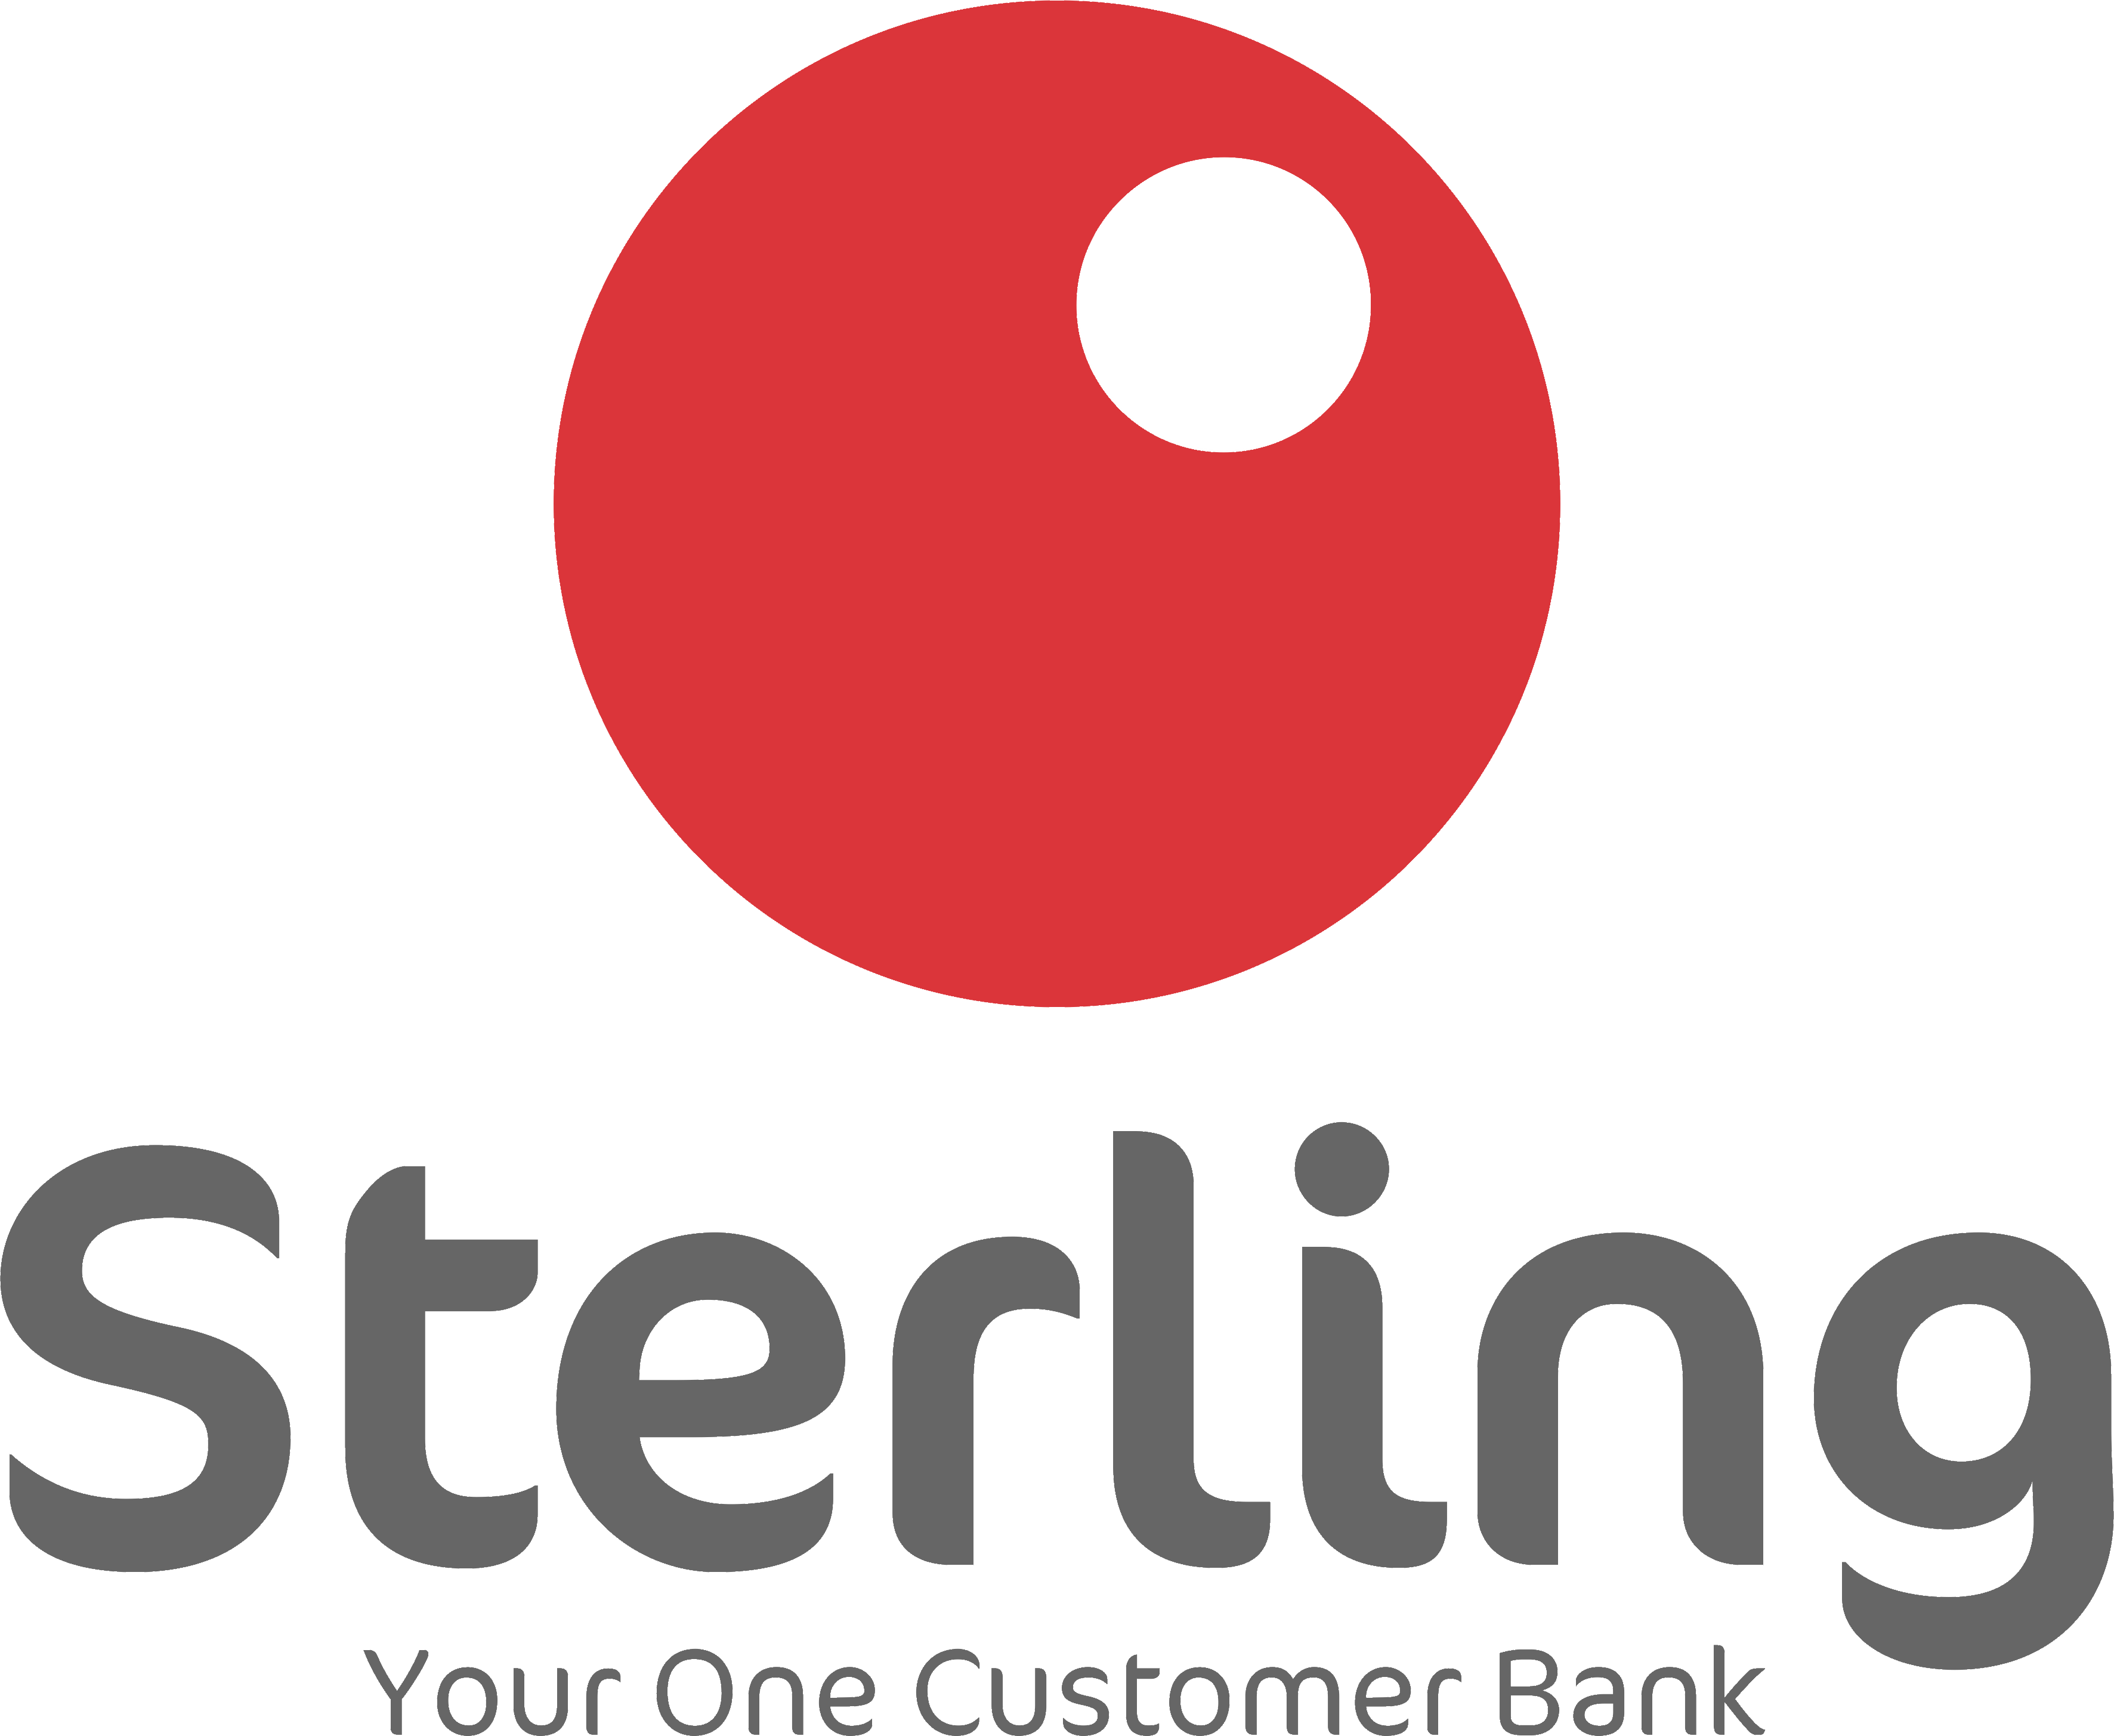 Sterling Bank Logo